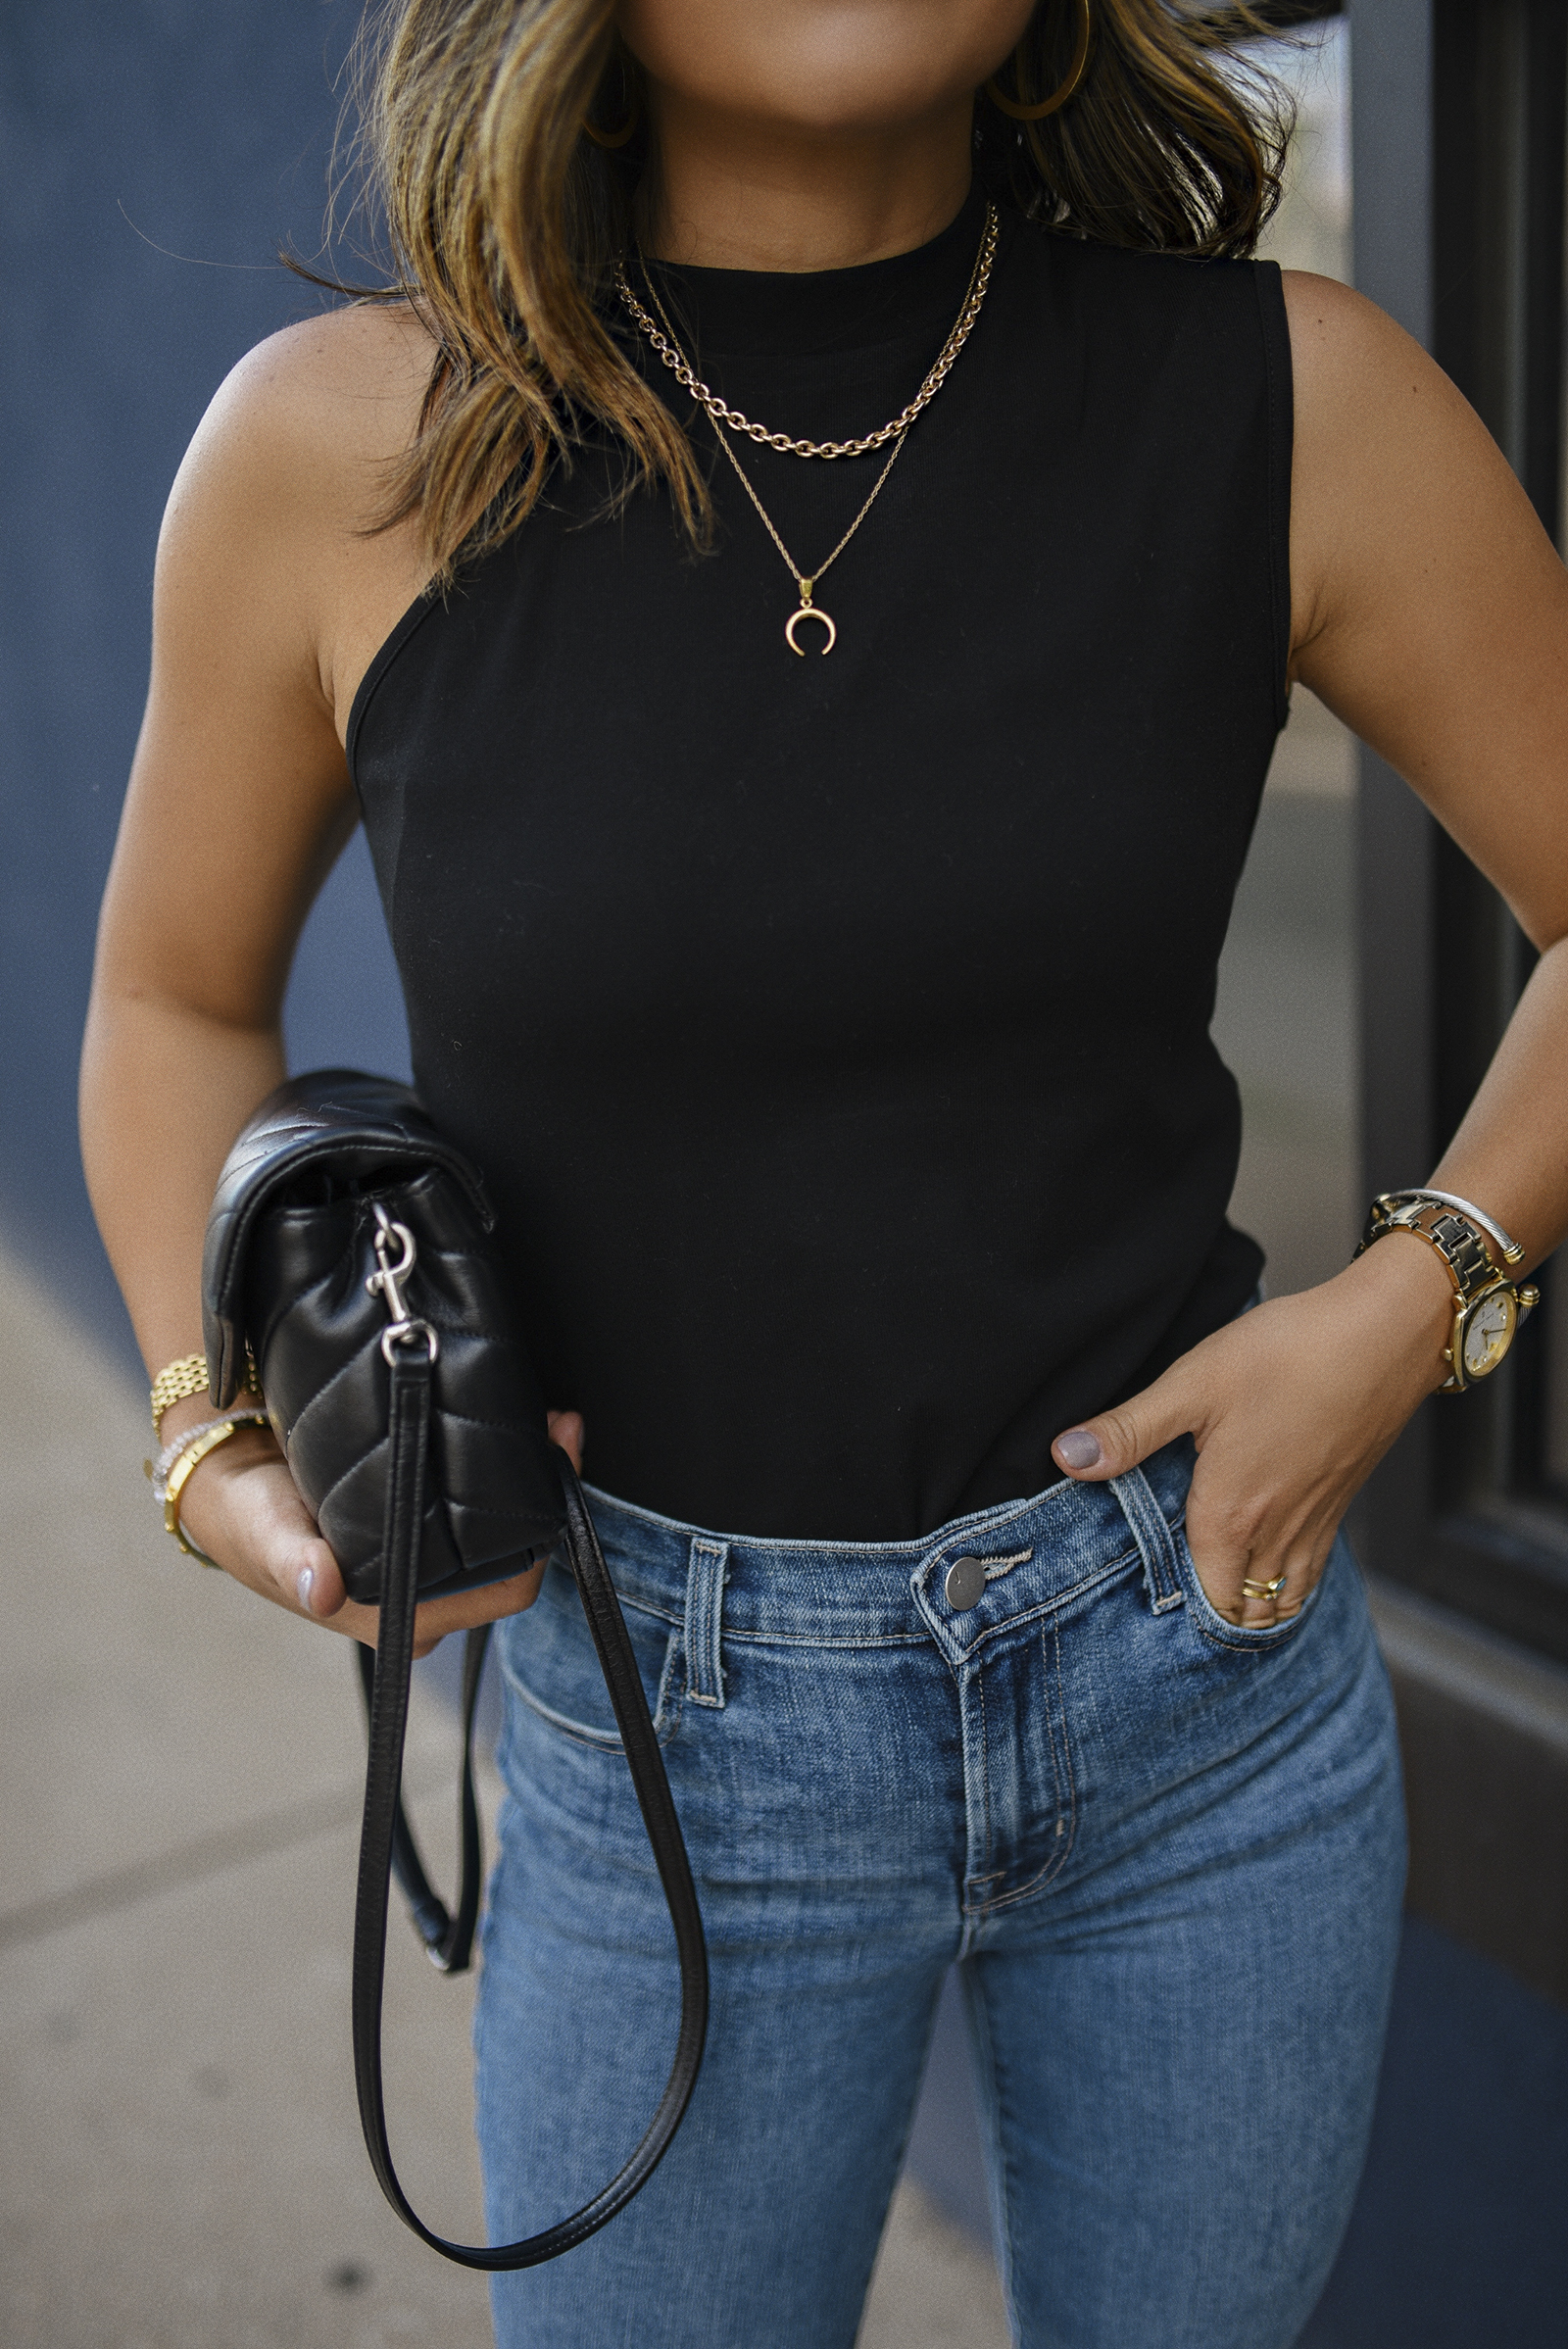 Carolina Hellal of Chic Talk wearing a Chicwish black top,Tenth and Spruce wool blazer, JBrand skinny jeans and YSL black crossbody bag.